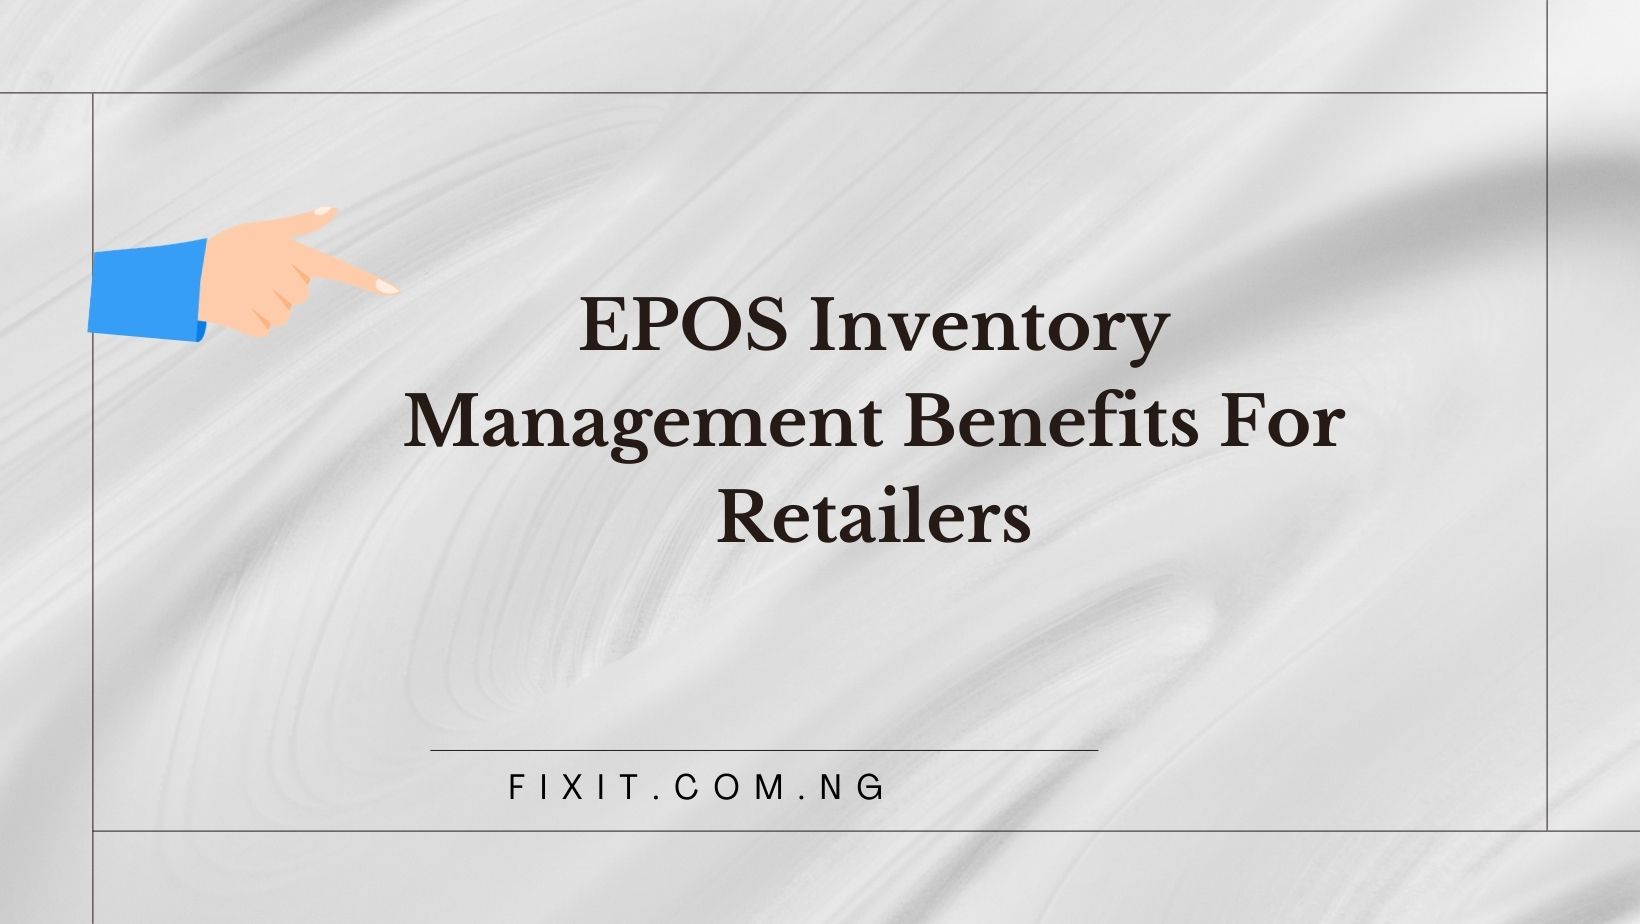 epos inventory management